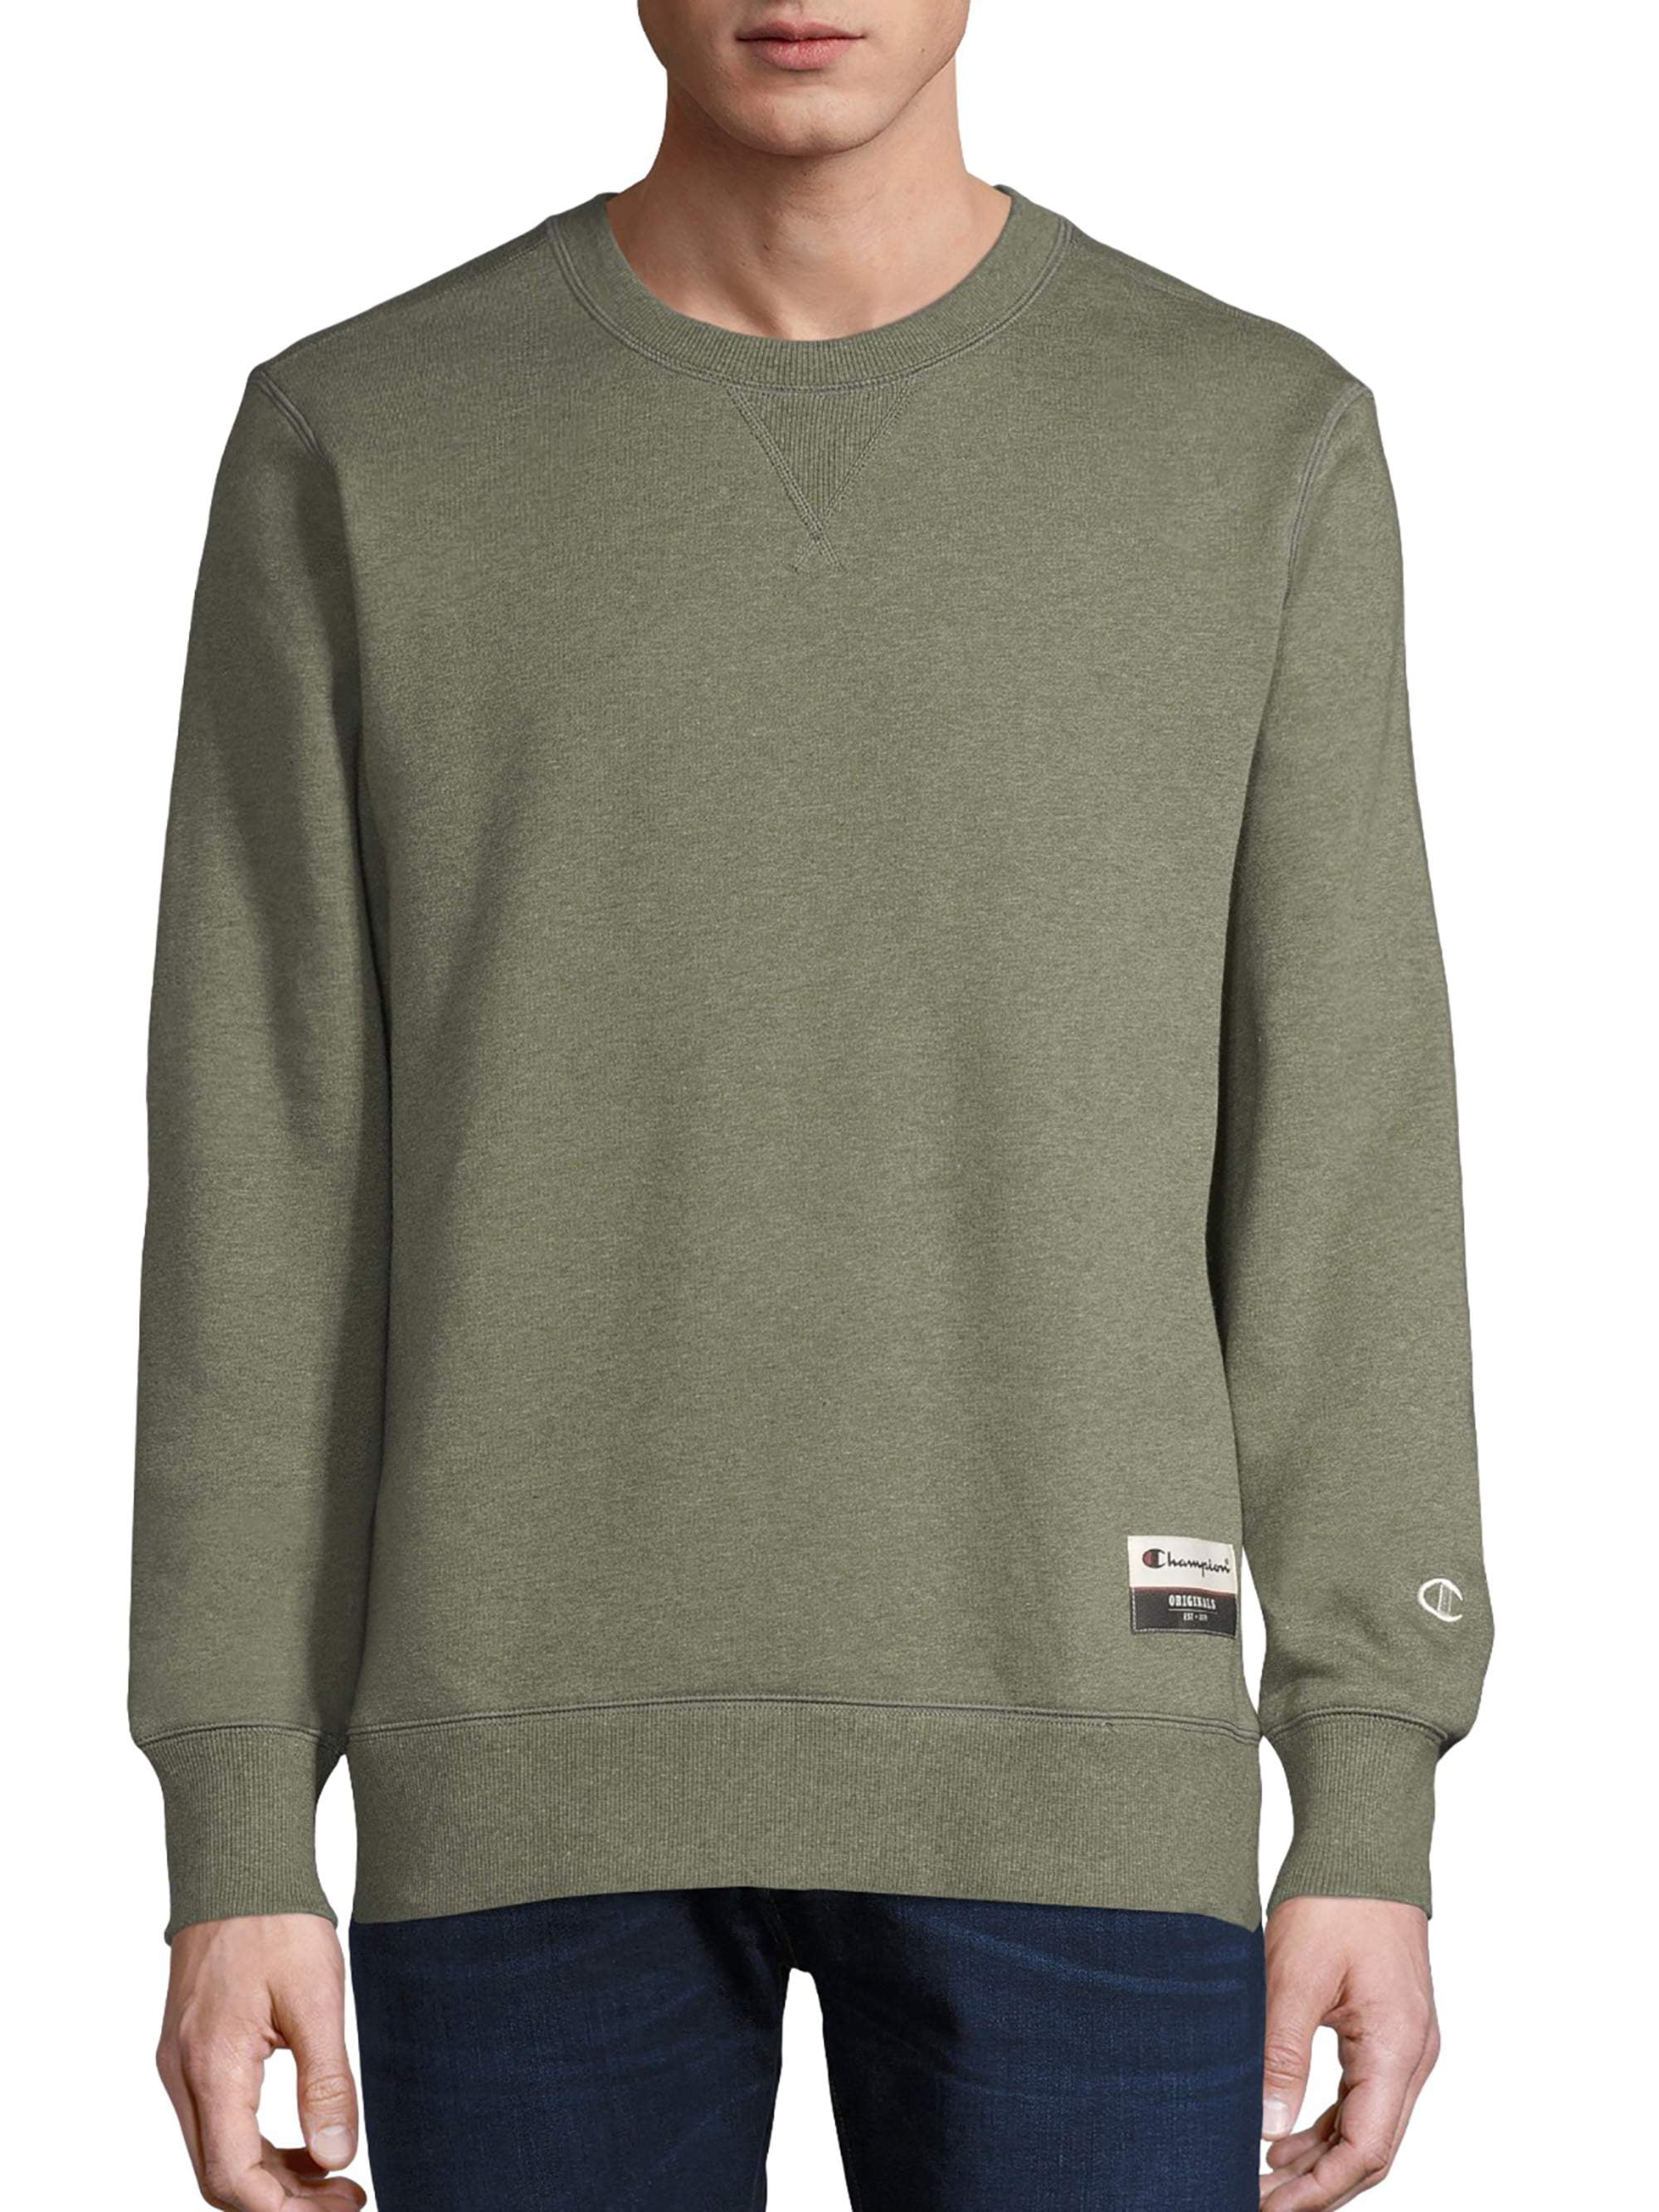 Champion Men's Sueded Fleece Sweatshirt, up to Size 3XL